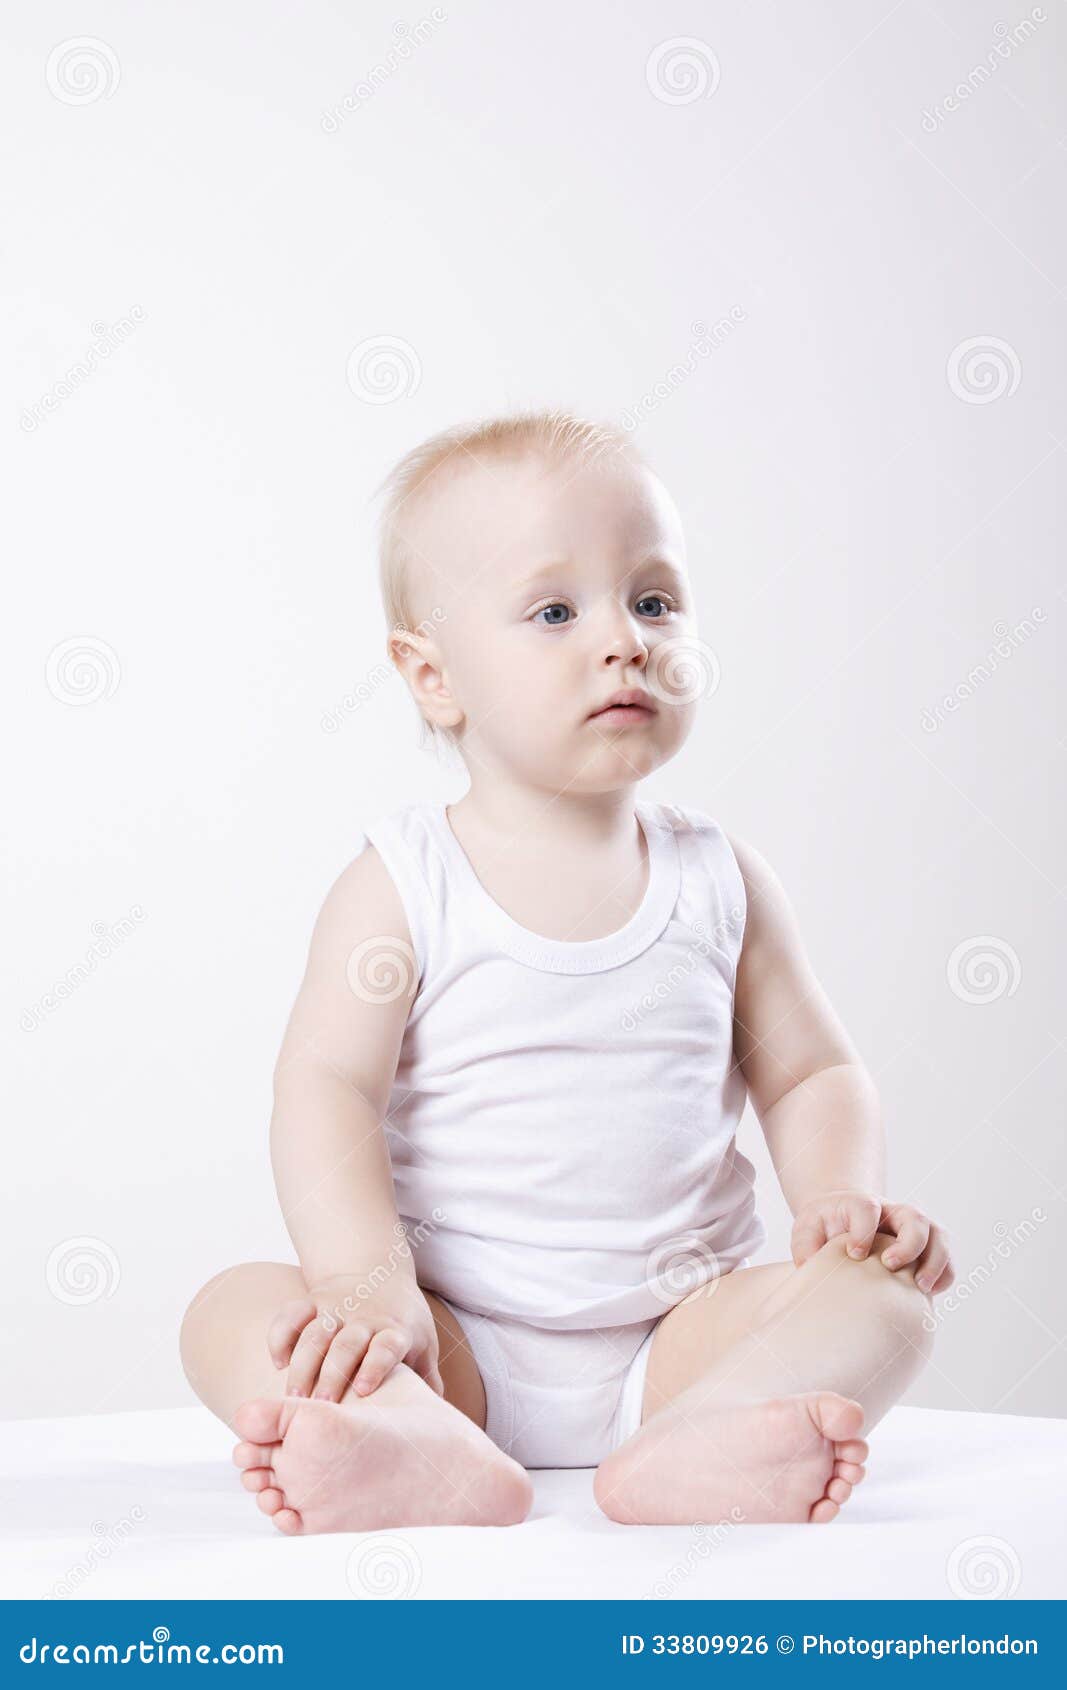 Baby Boy Sitting On Floor Royalty Free Stock Image - Image: 33809926